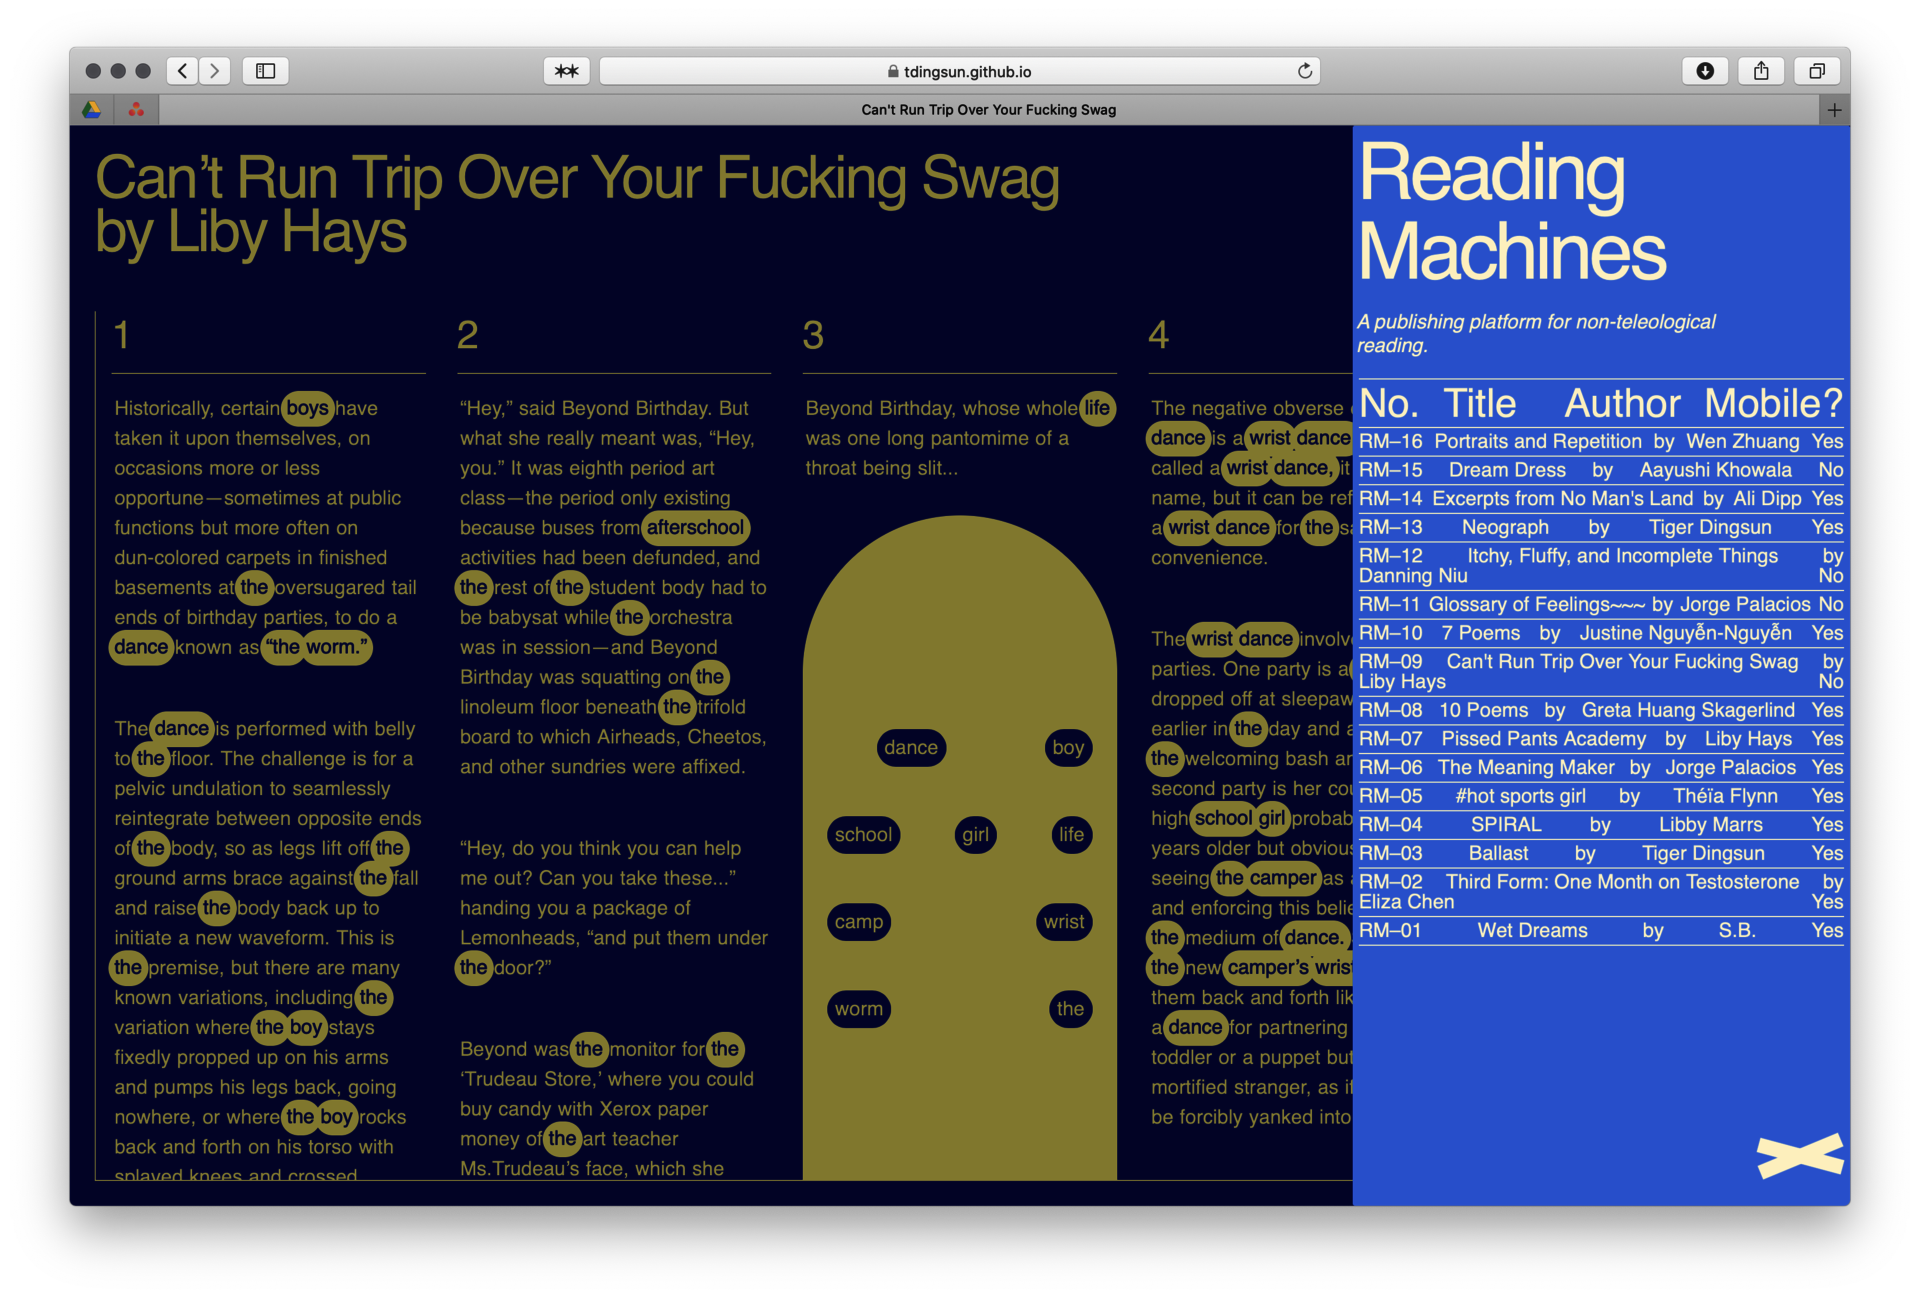 Screenshot of the publishing platform 'Reading Machines'